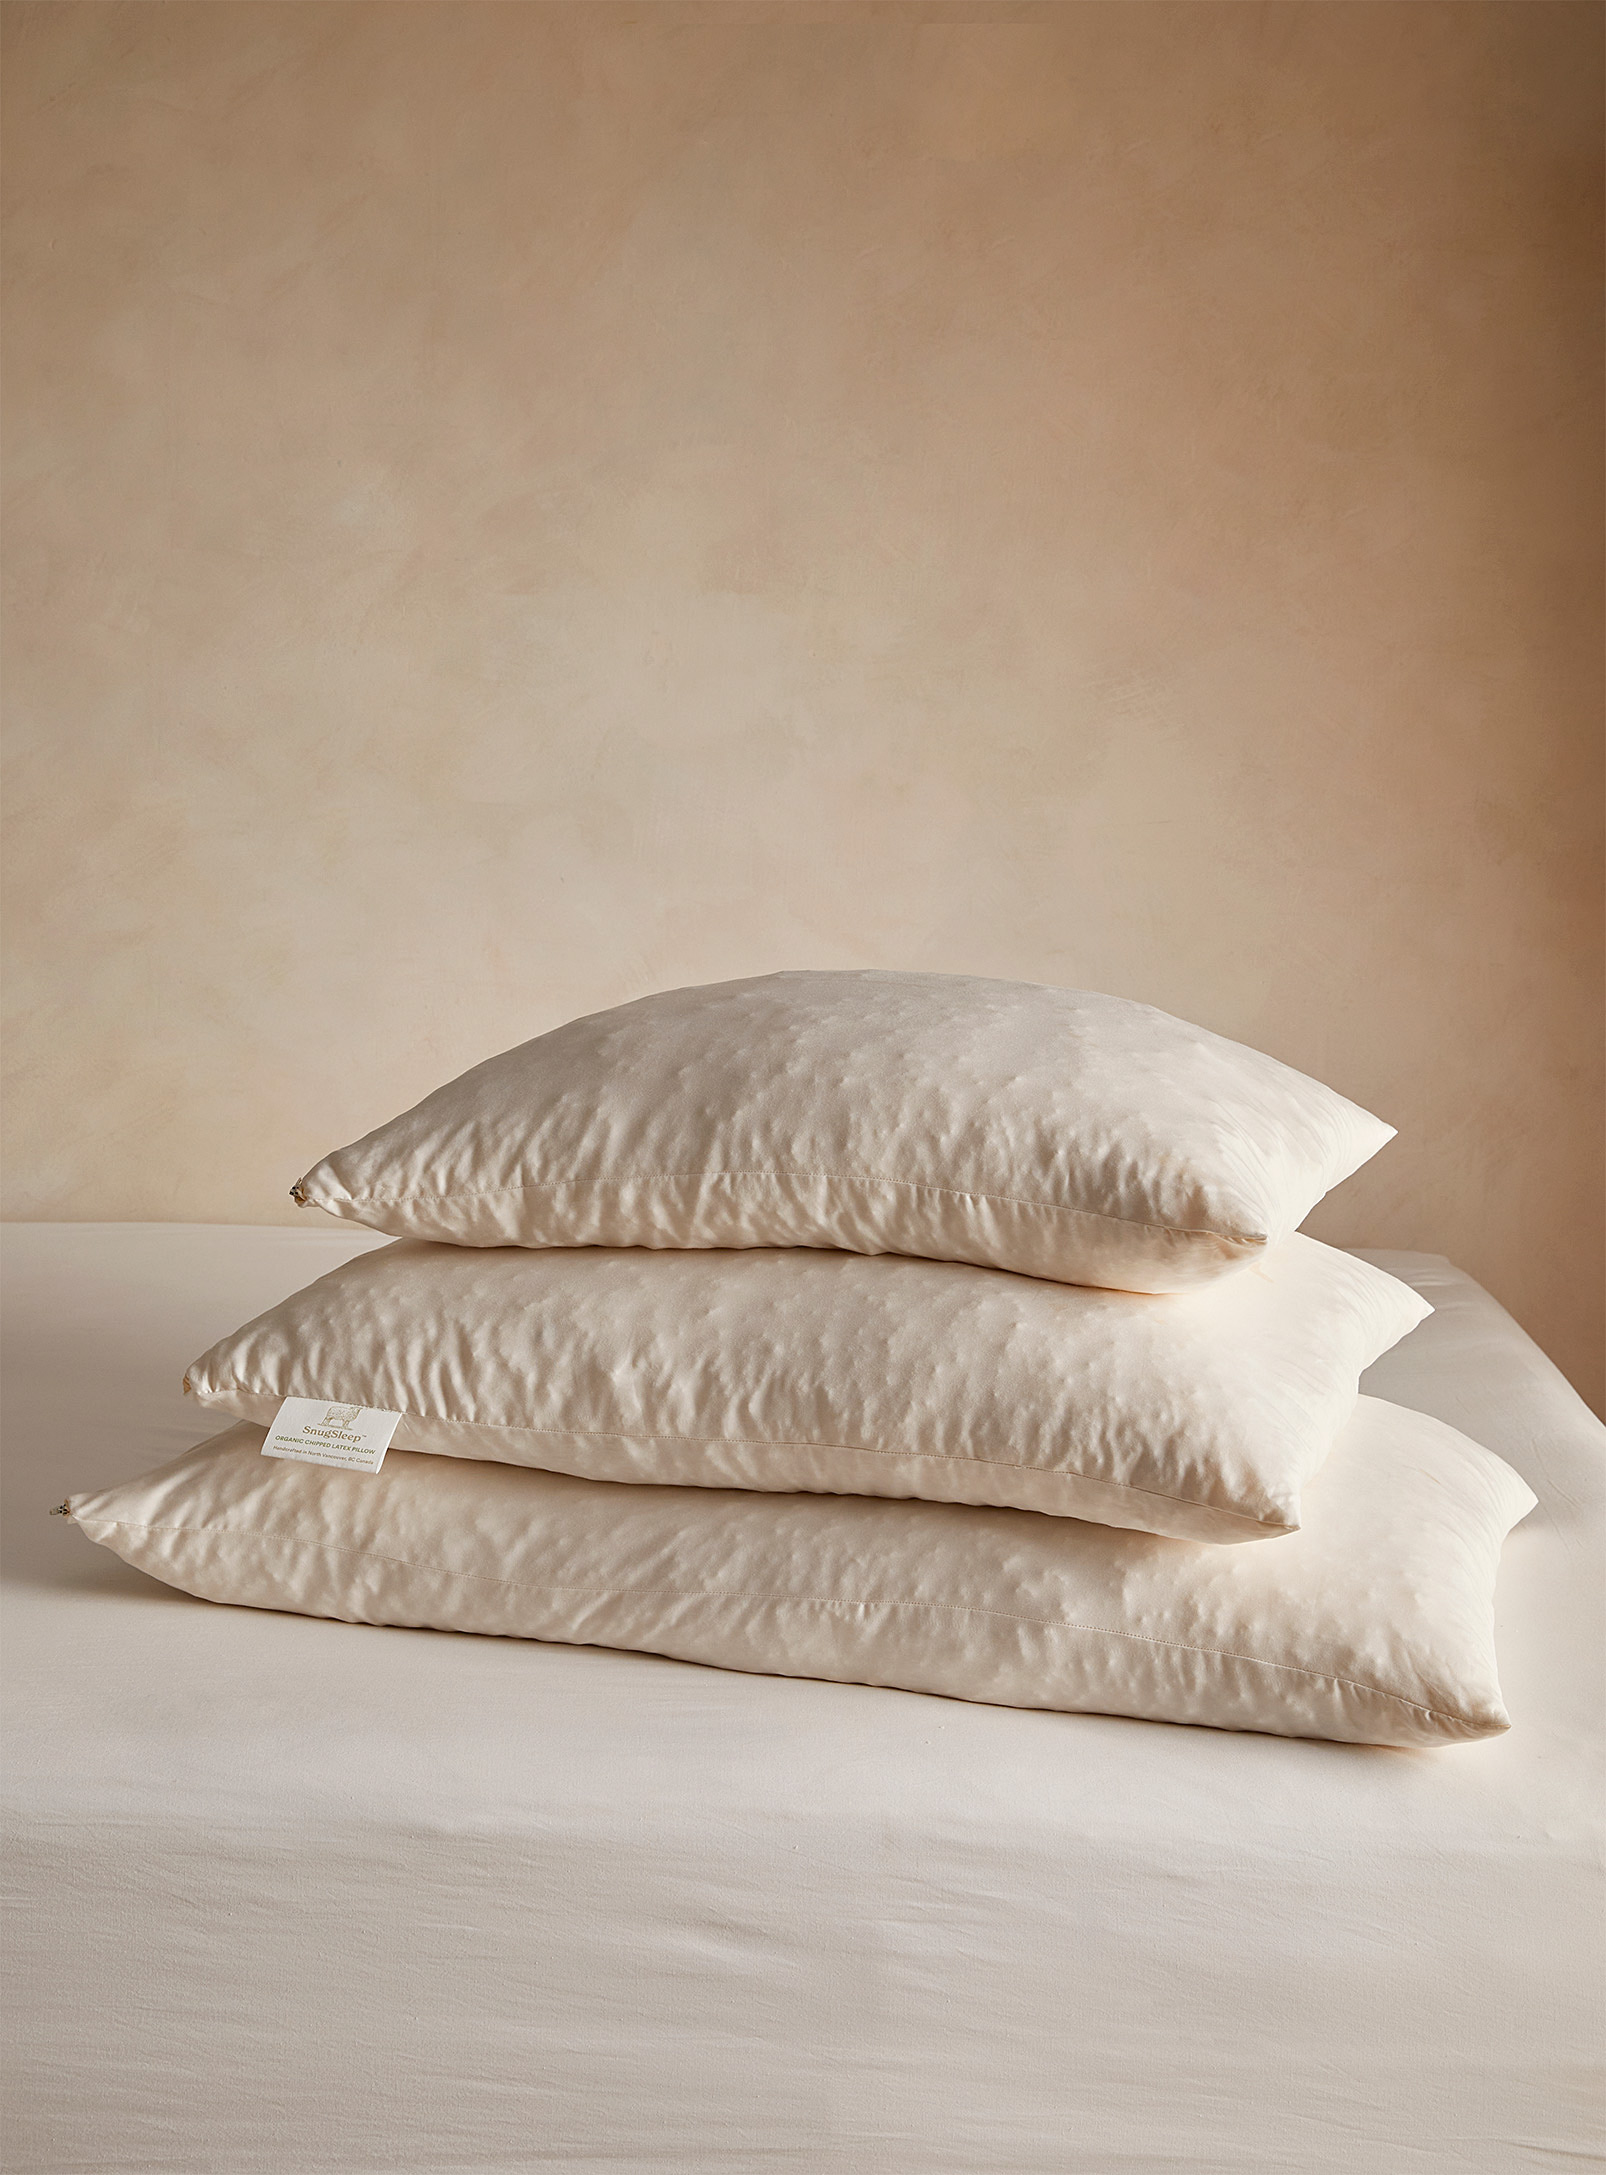 SnugSleep - Organic latex pillow